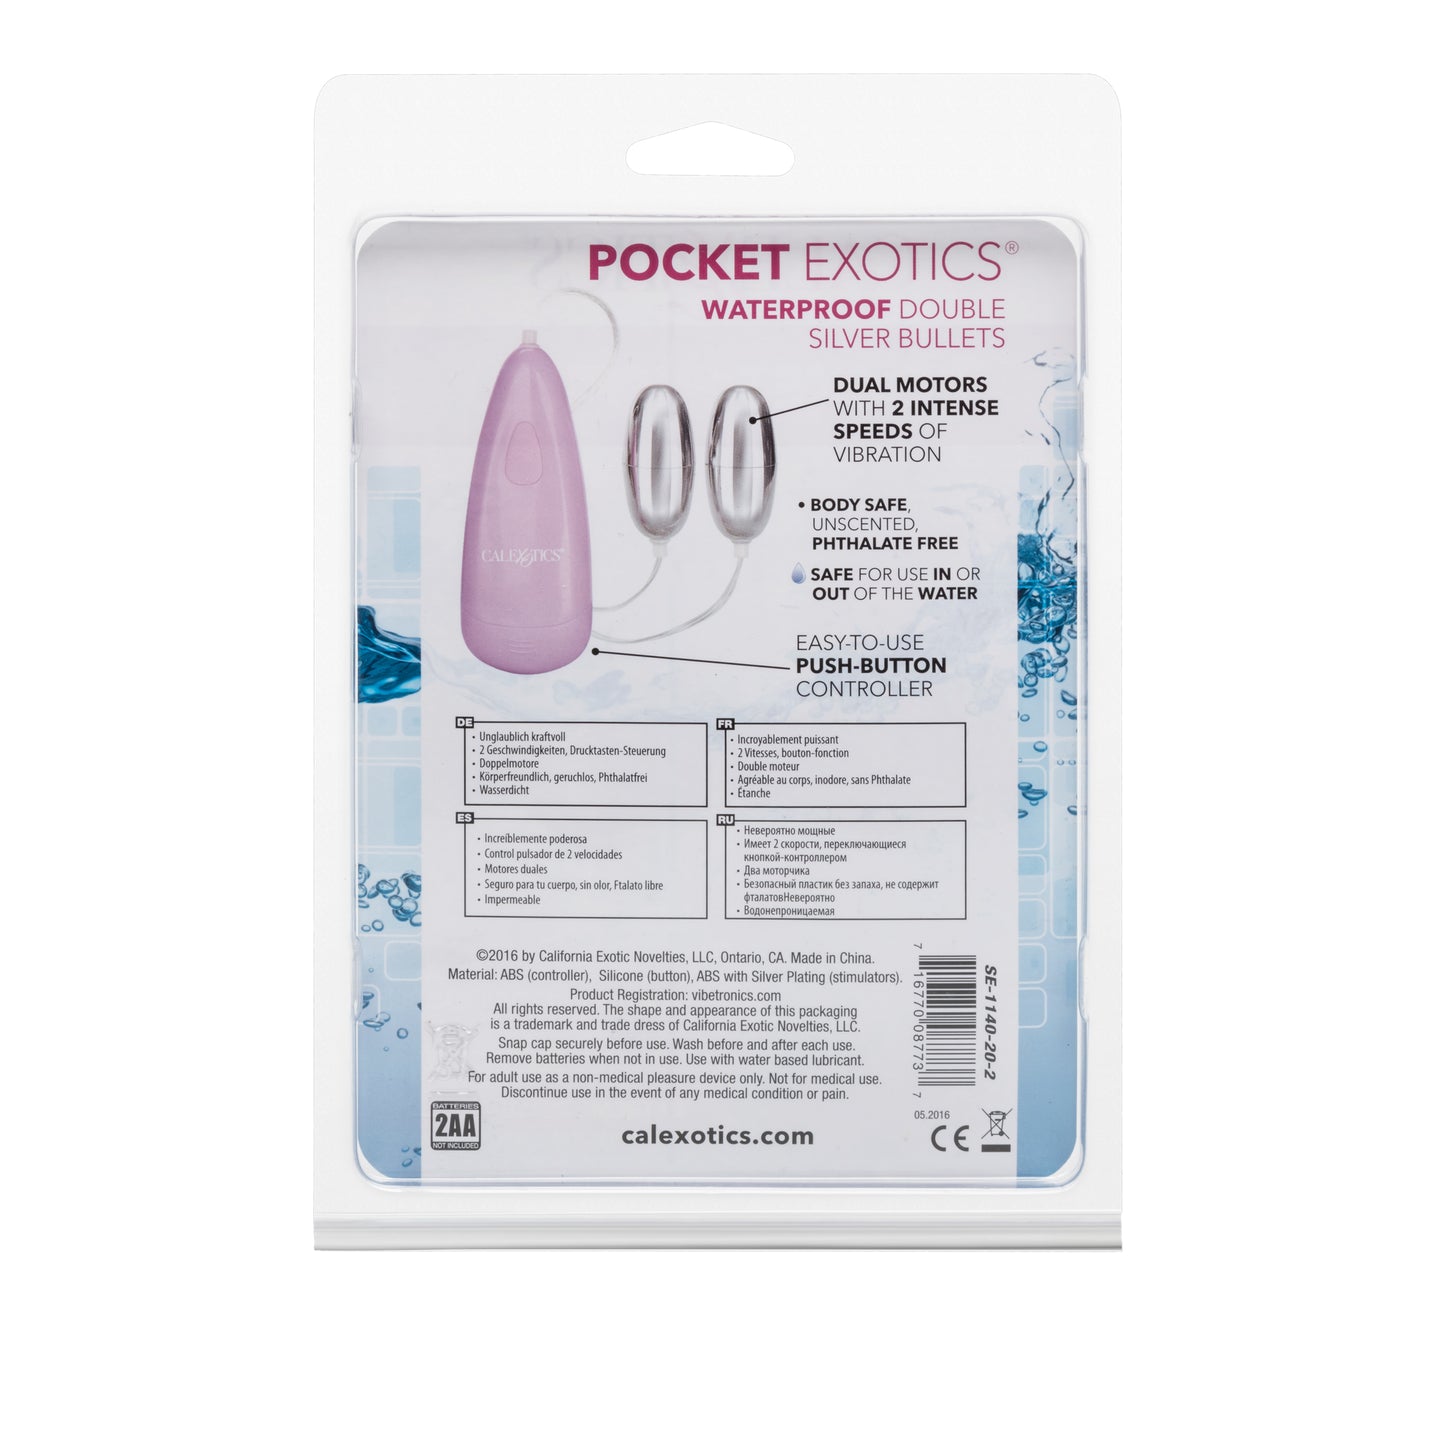 Pocket Exotics® Waterproof Double Silver Bullets